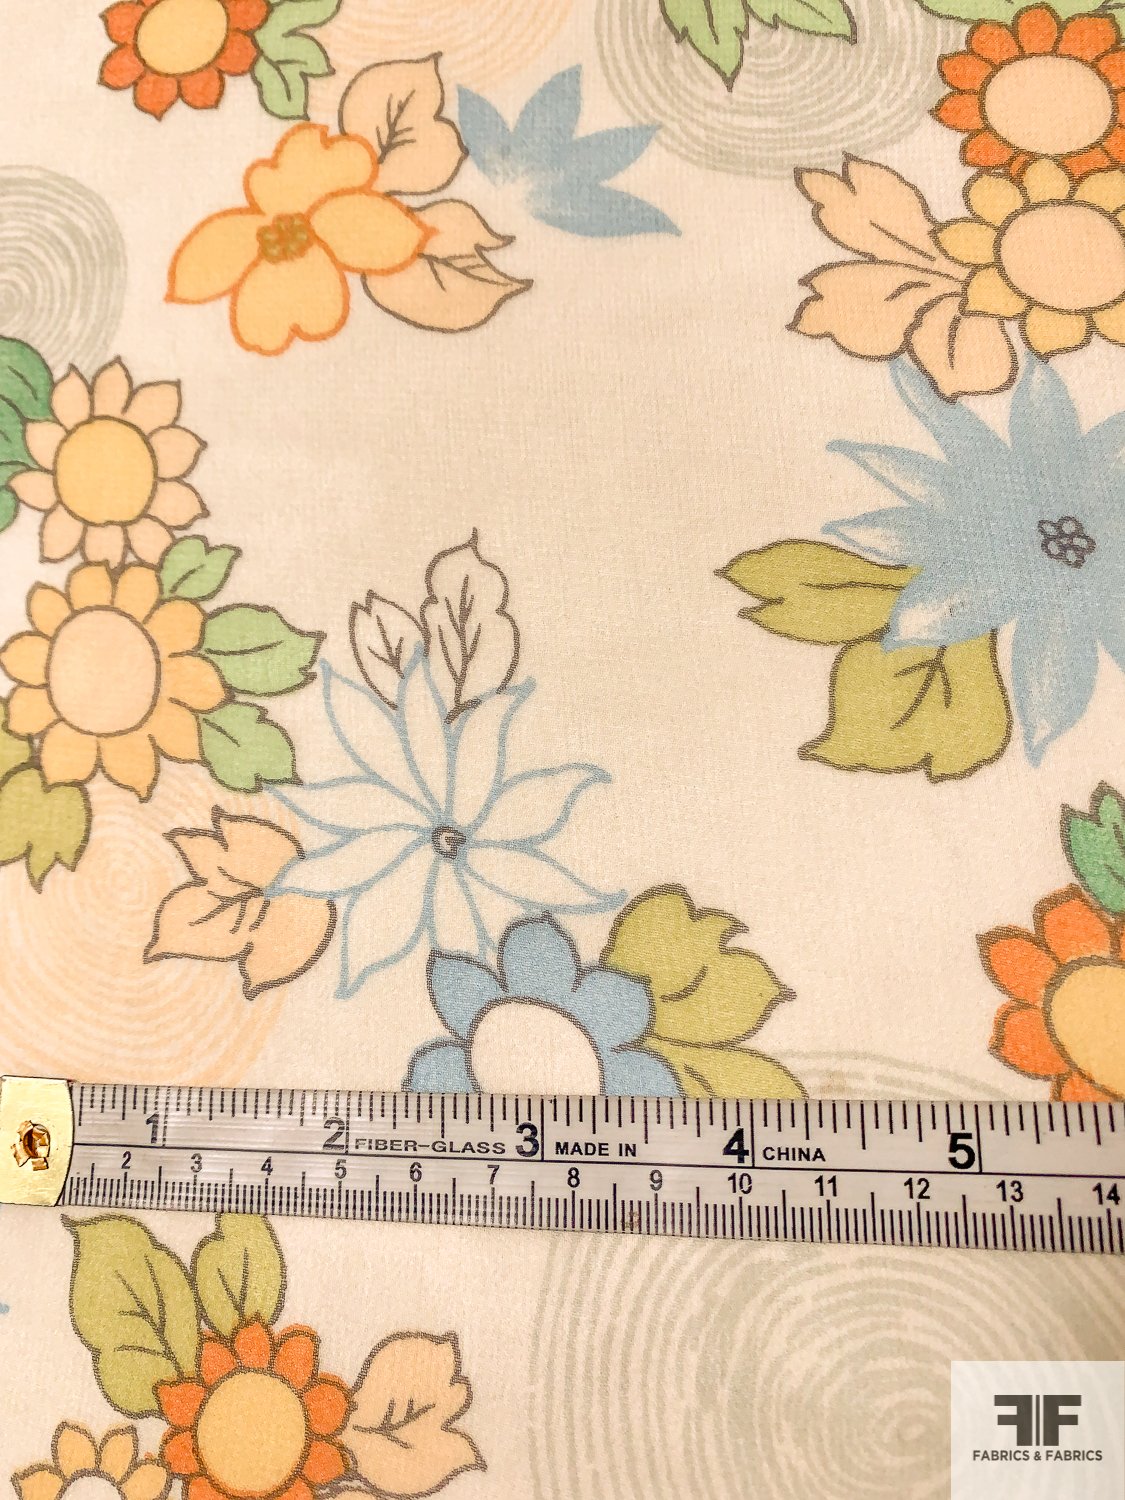 Floral and Circle Swirls Printed Silk Chiffon - Orange / Yellows / Greens / Sky Blue